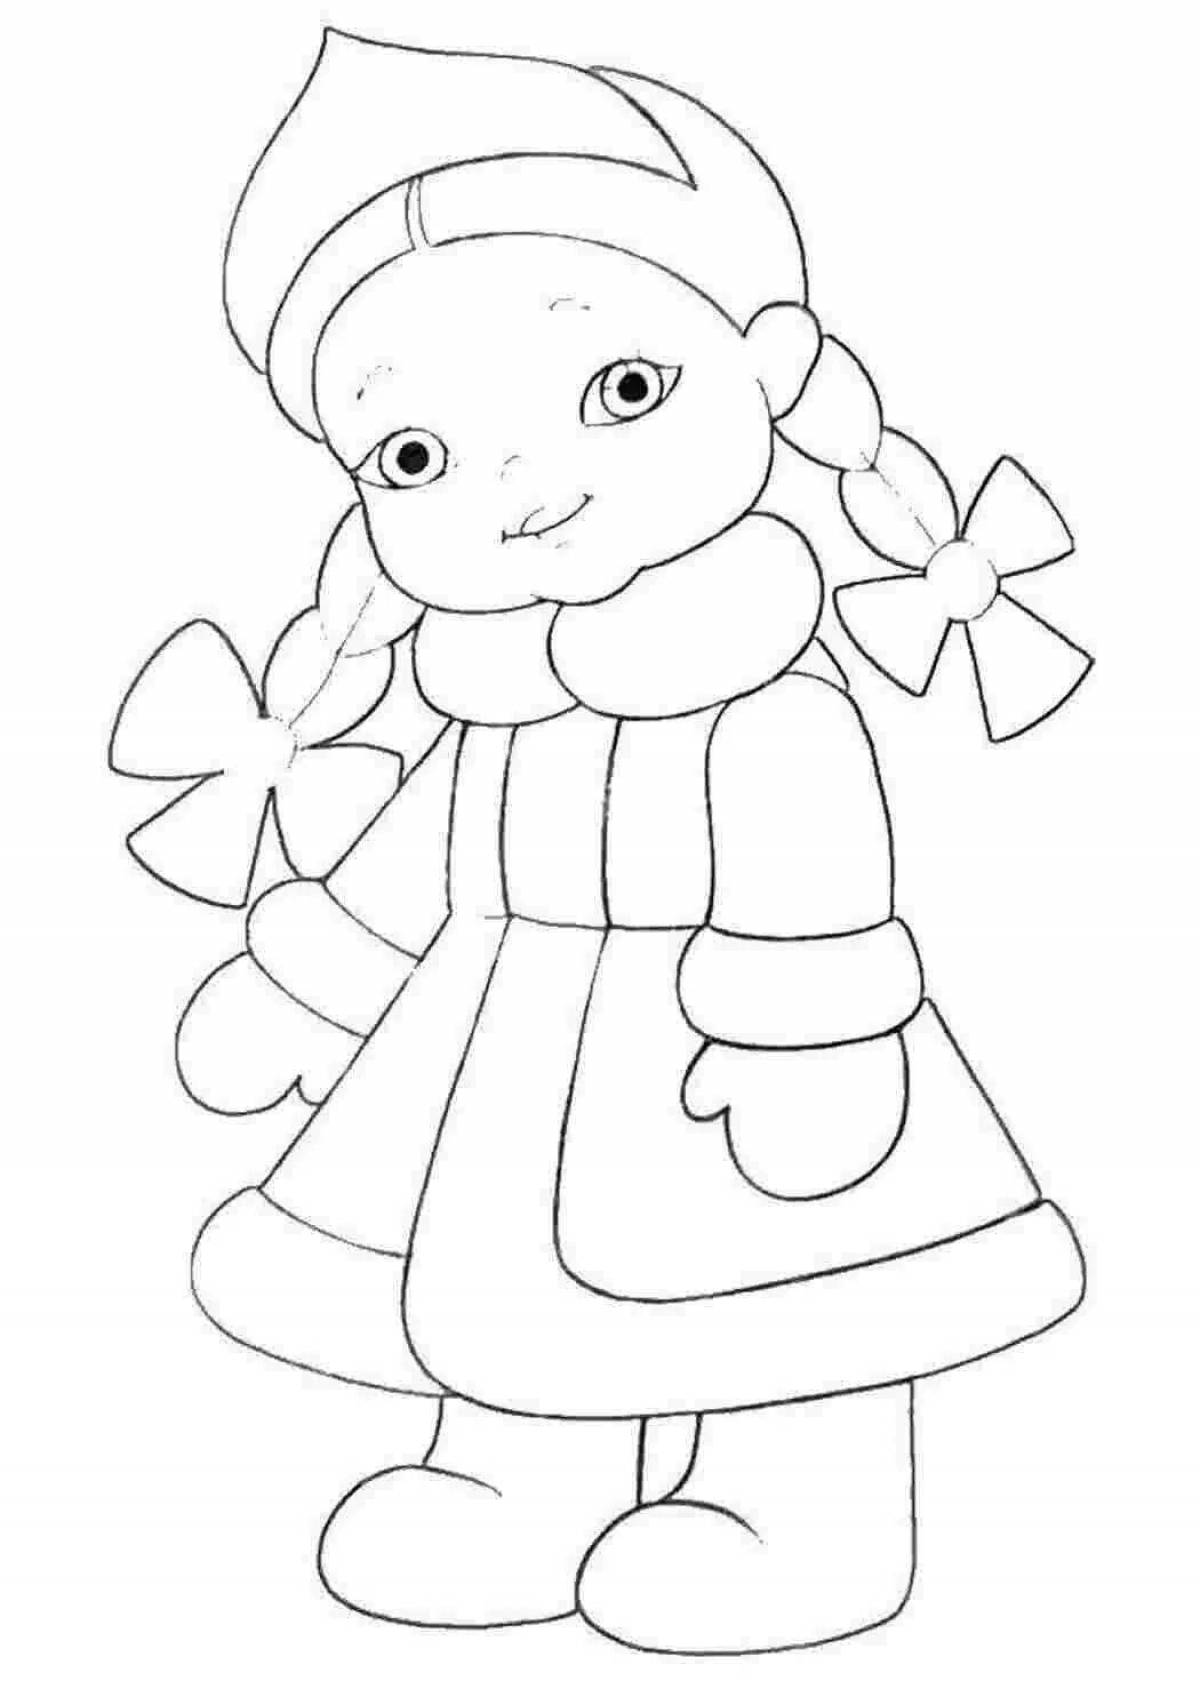 Dazzling coloring girl in a fur coat